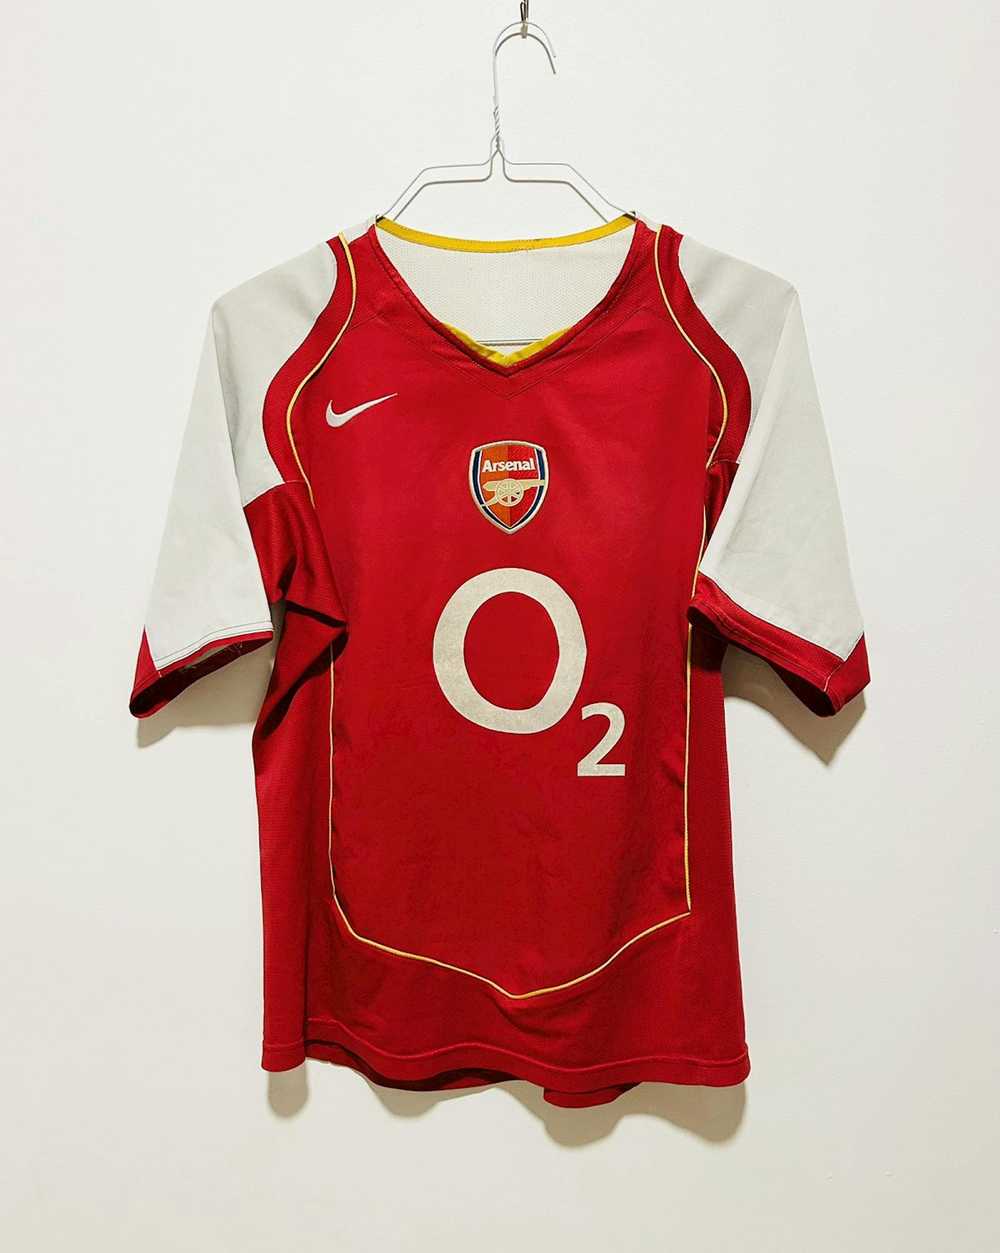 Nike × Vintage Arsenal 2005/06 home jersey - image 1